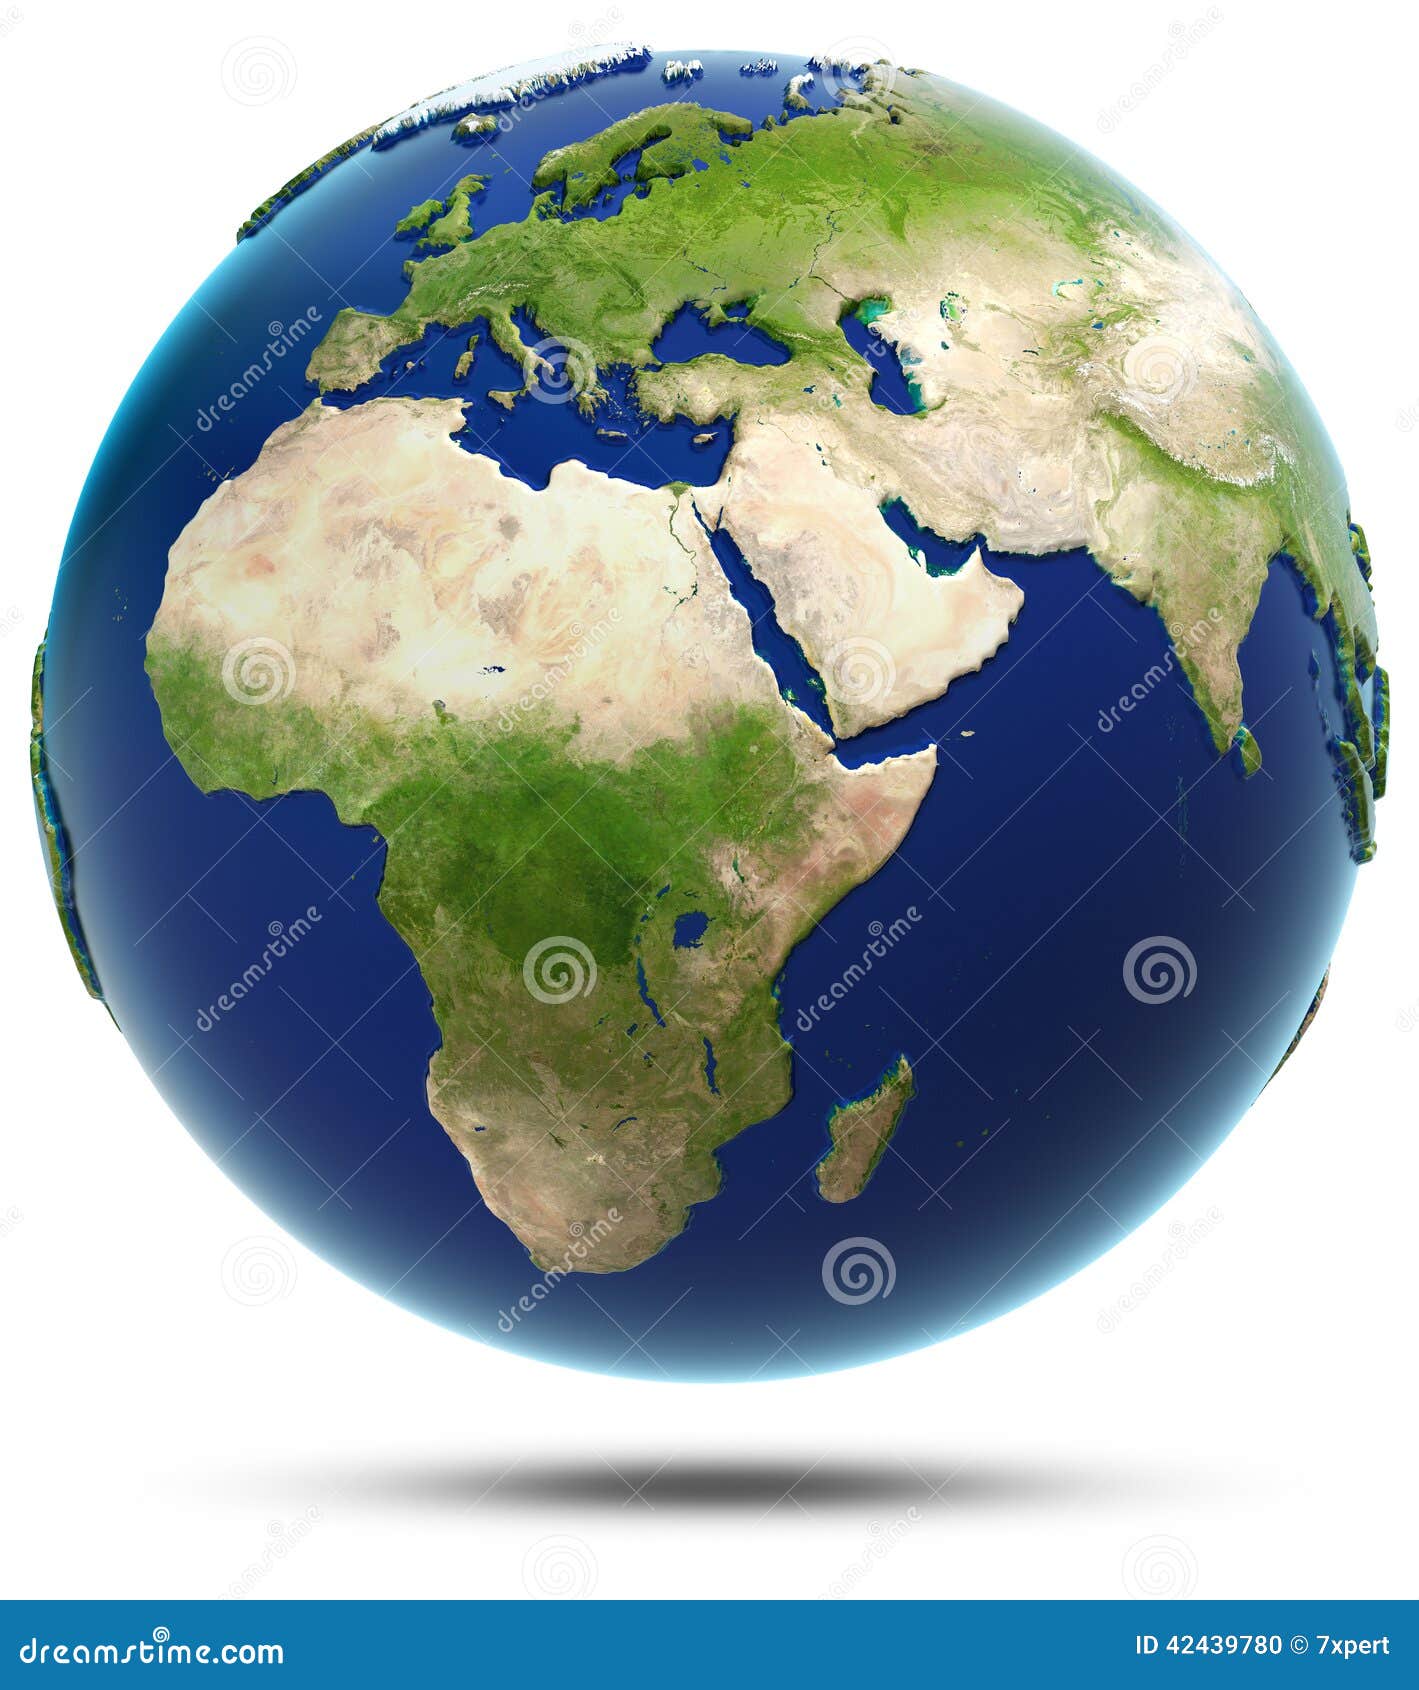 earth model - africa and eurasia